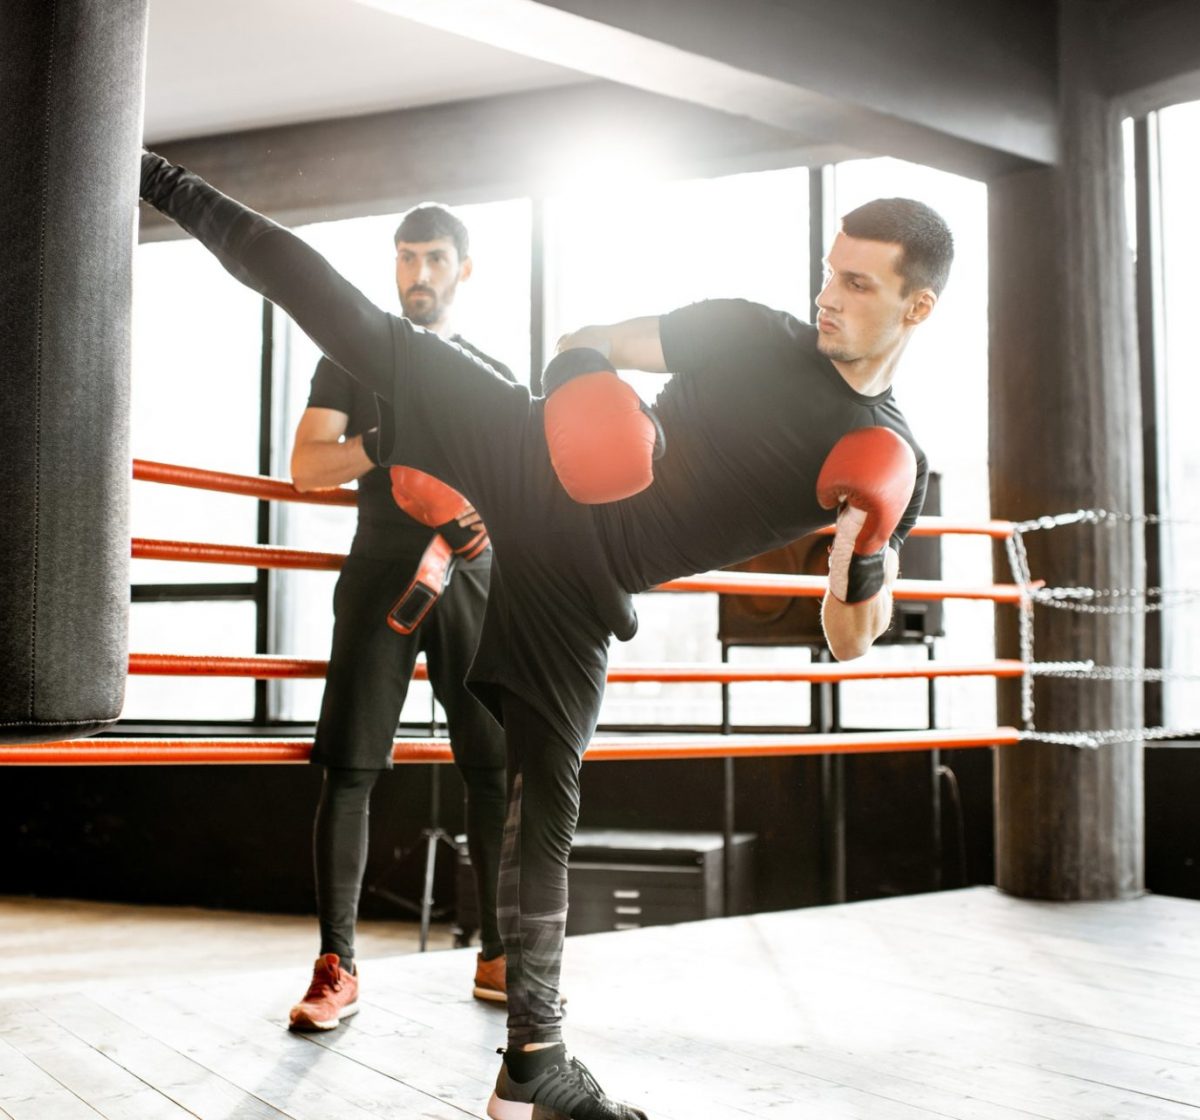 Kickboxer training with punching bag